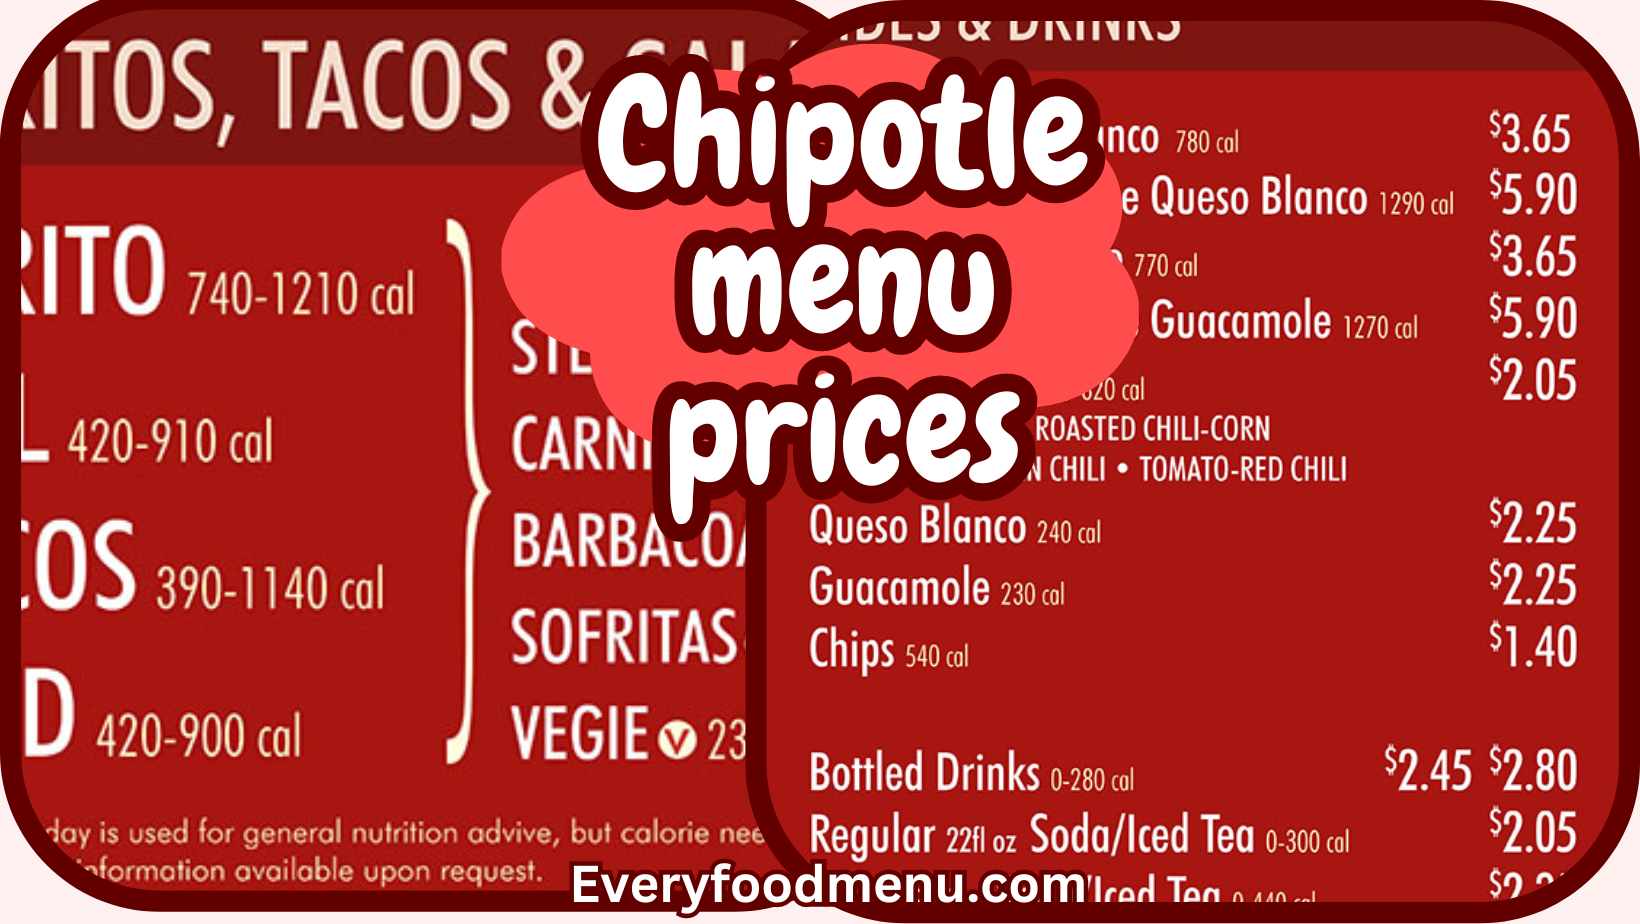 Chipotle menu prices